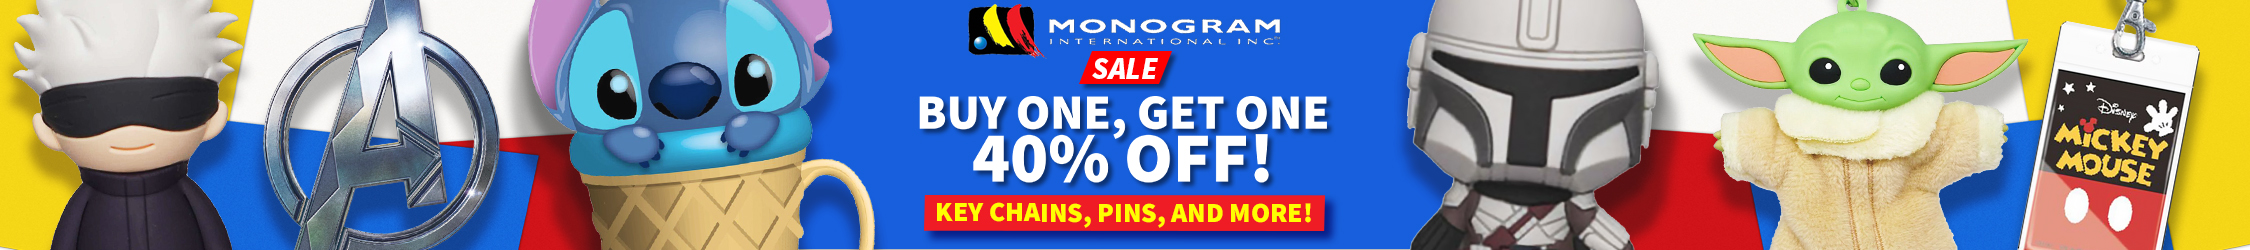 Buy One,Get One 40% Off on Monogram